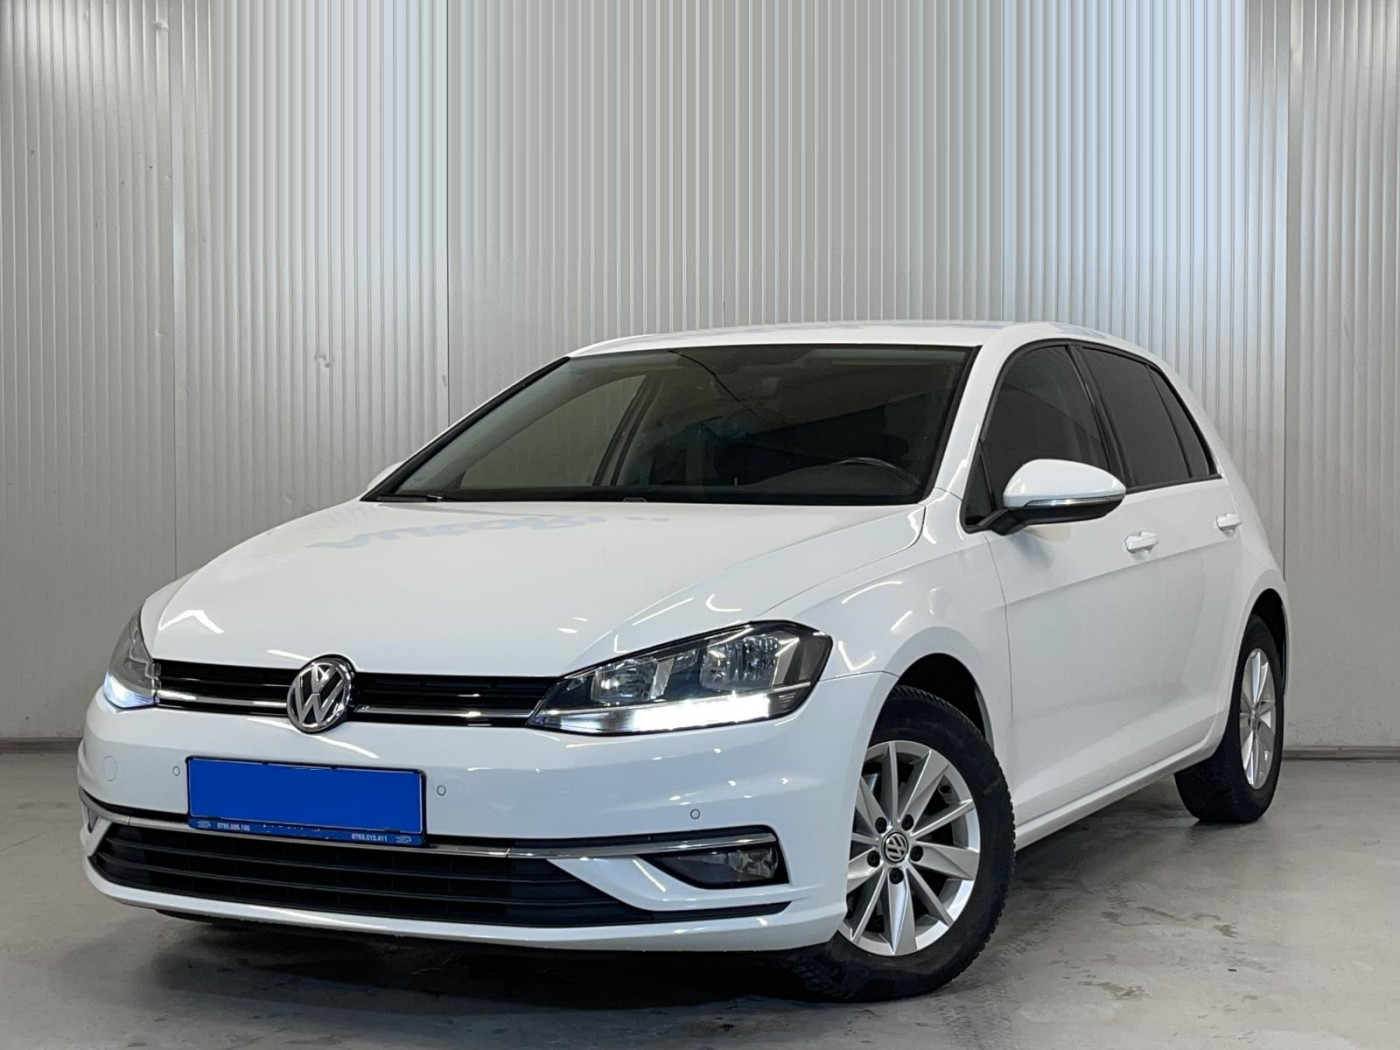 Volkswagen Golf  116 CP   - 16590 €,   81300 km,  anul 2017,  culoare alb 